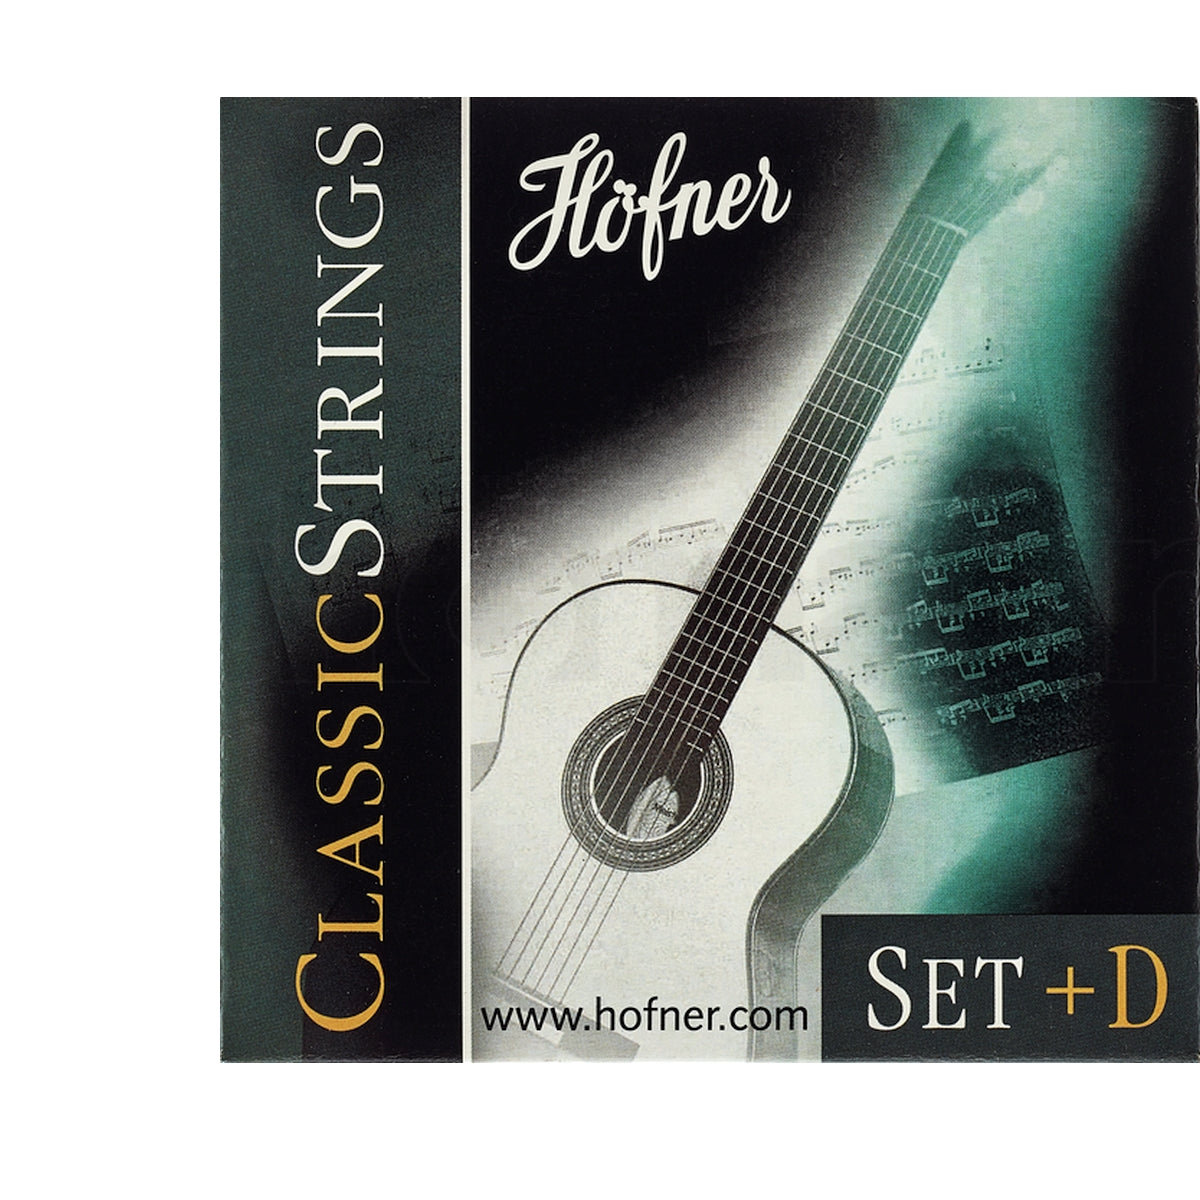 Höfner Classic Strings